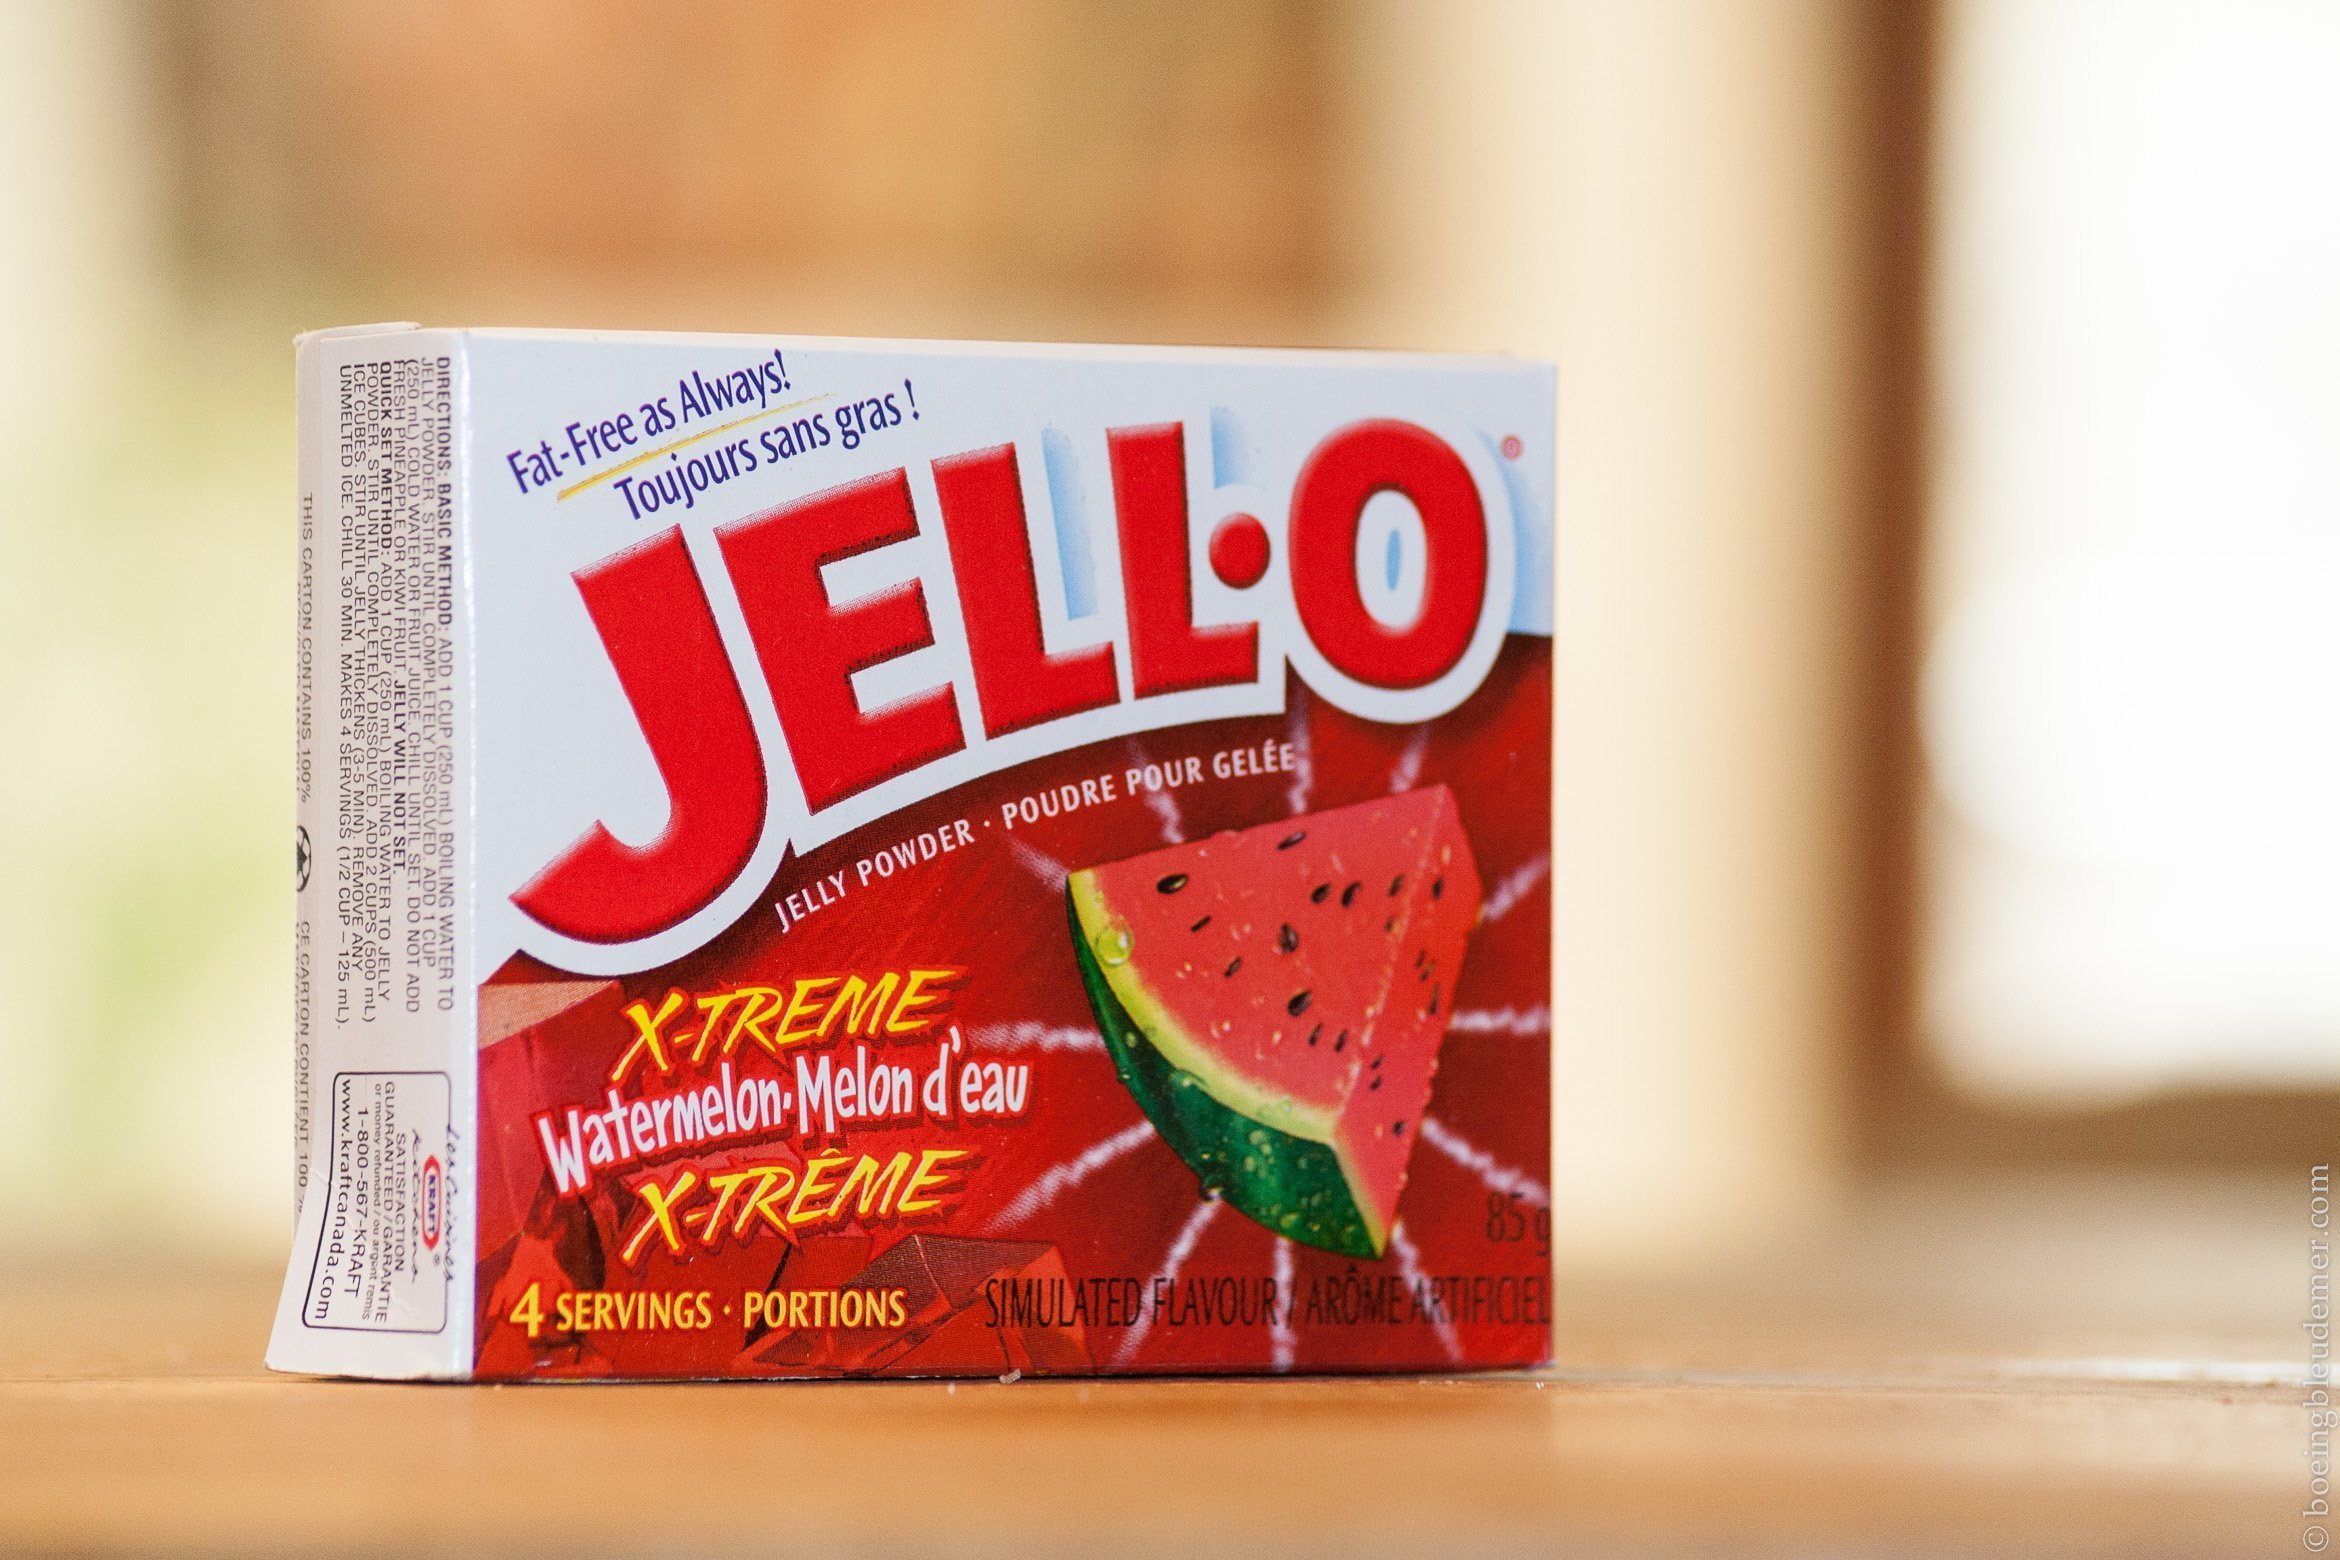 Jell-O, un dessert facile : emballage